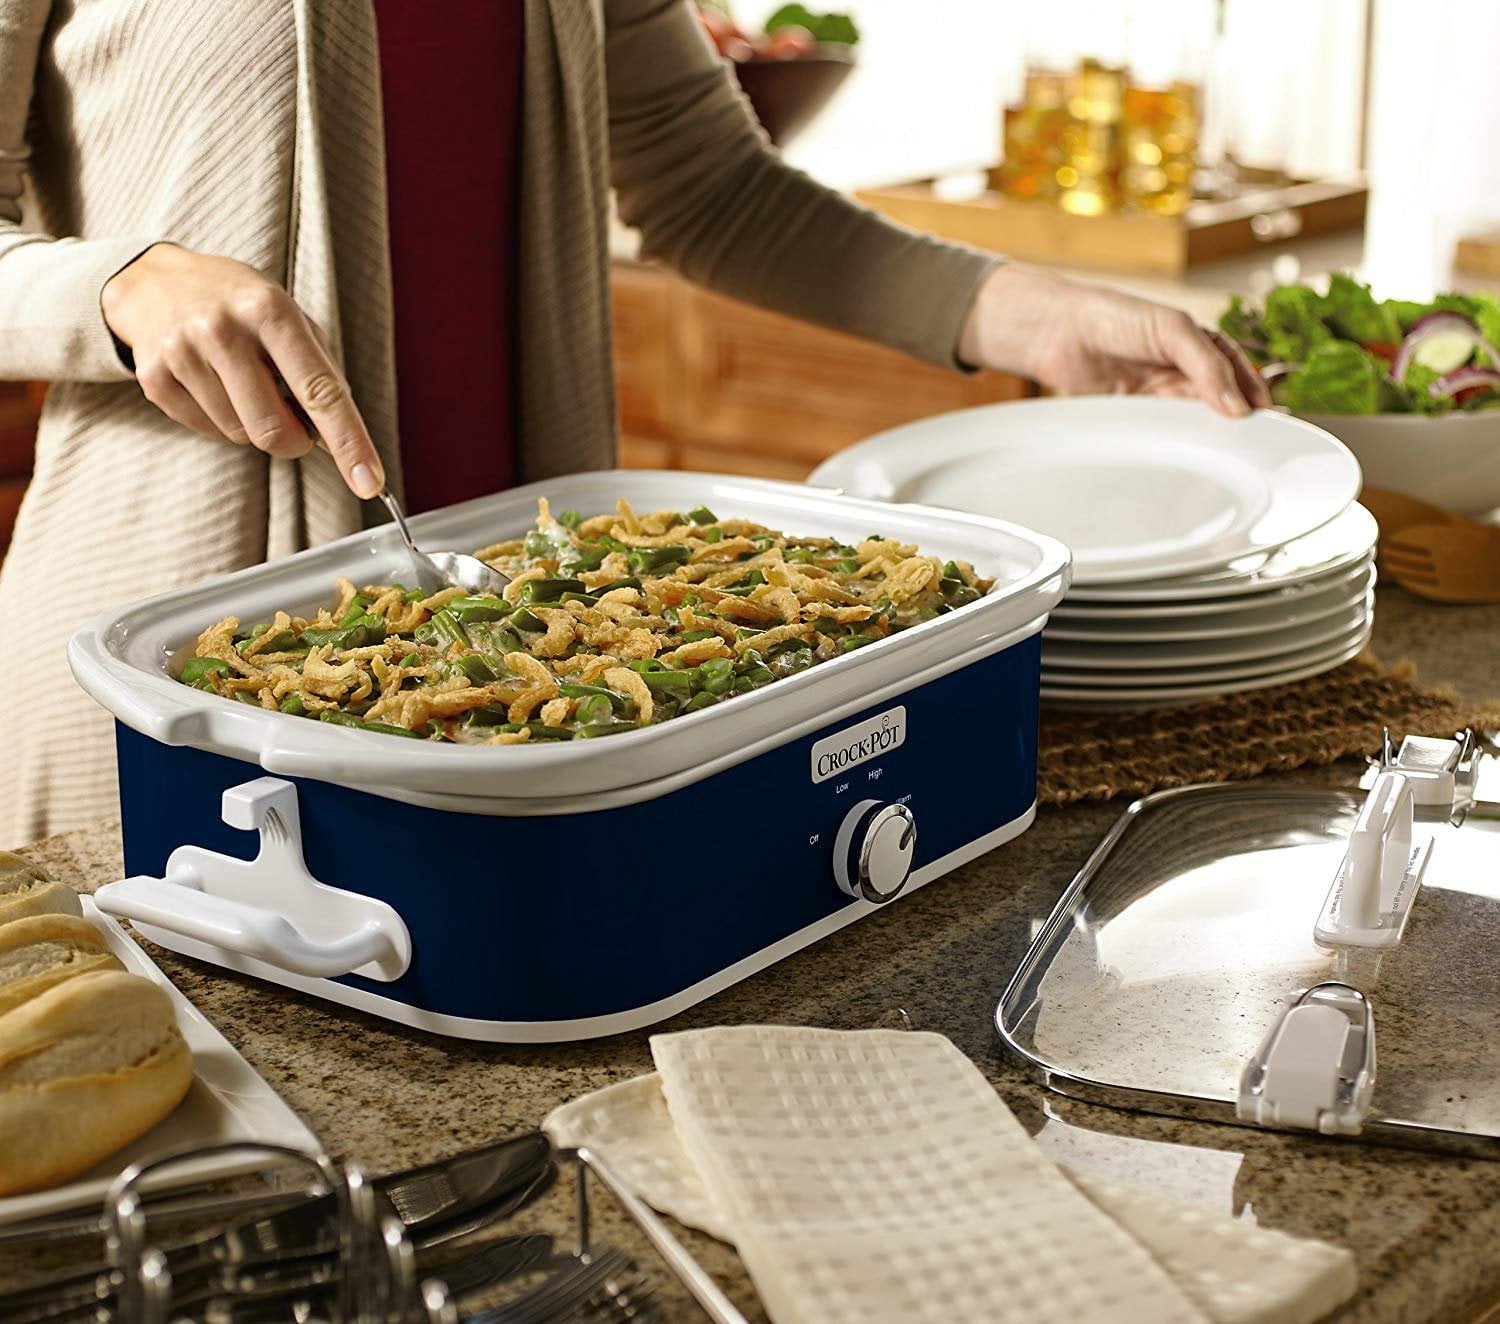 Crock-Pot Small 3.5 Quart Manual Casserole Slow Cooker and Food Warmer,  Navy Blue (SCCPCCM350-BL)